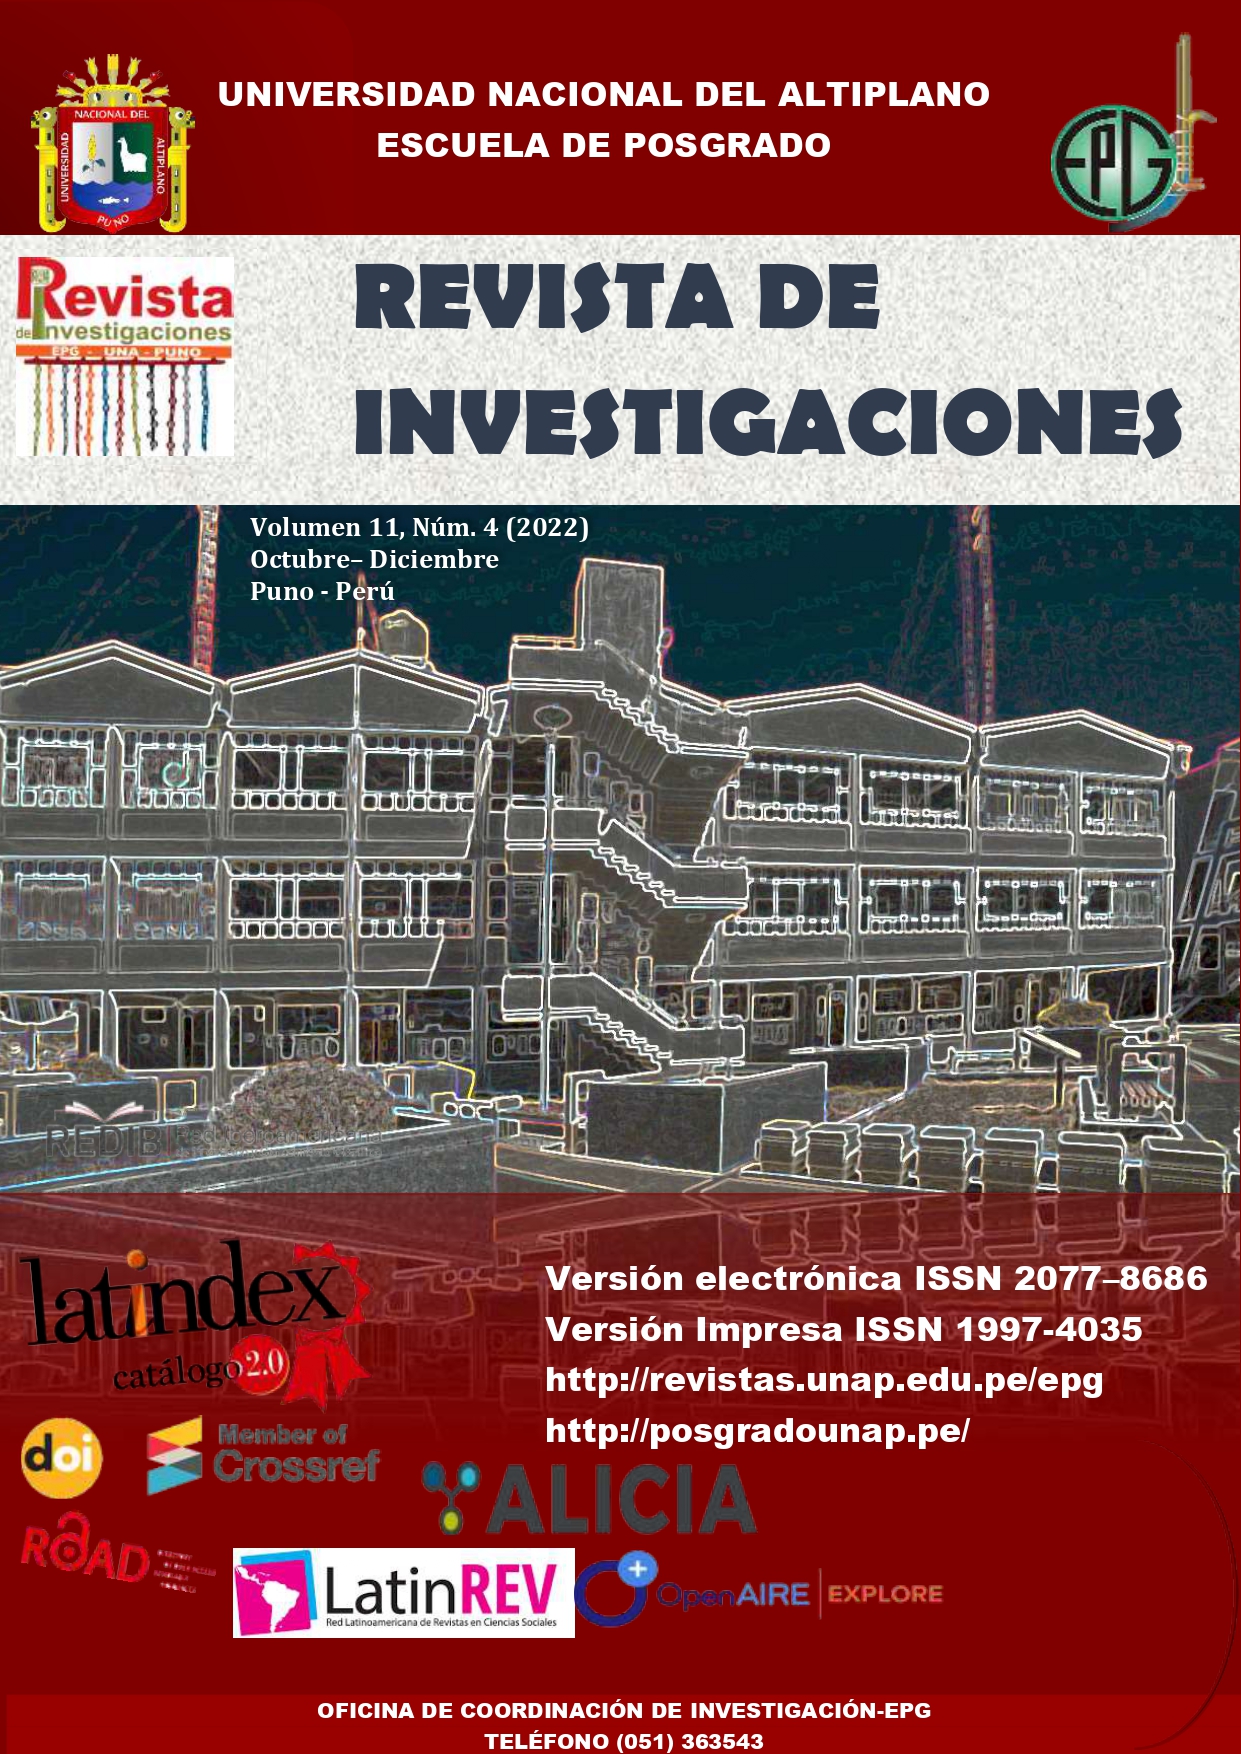 "Revista de Investigaciones"